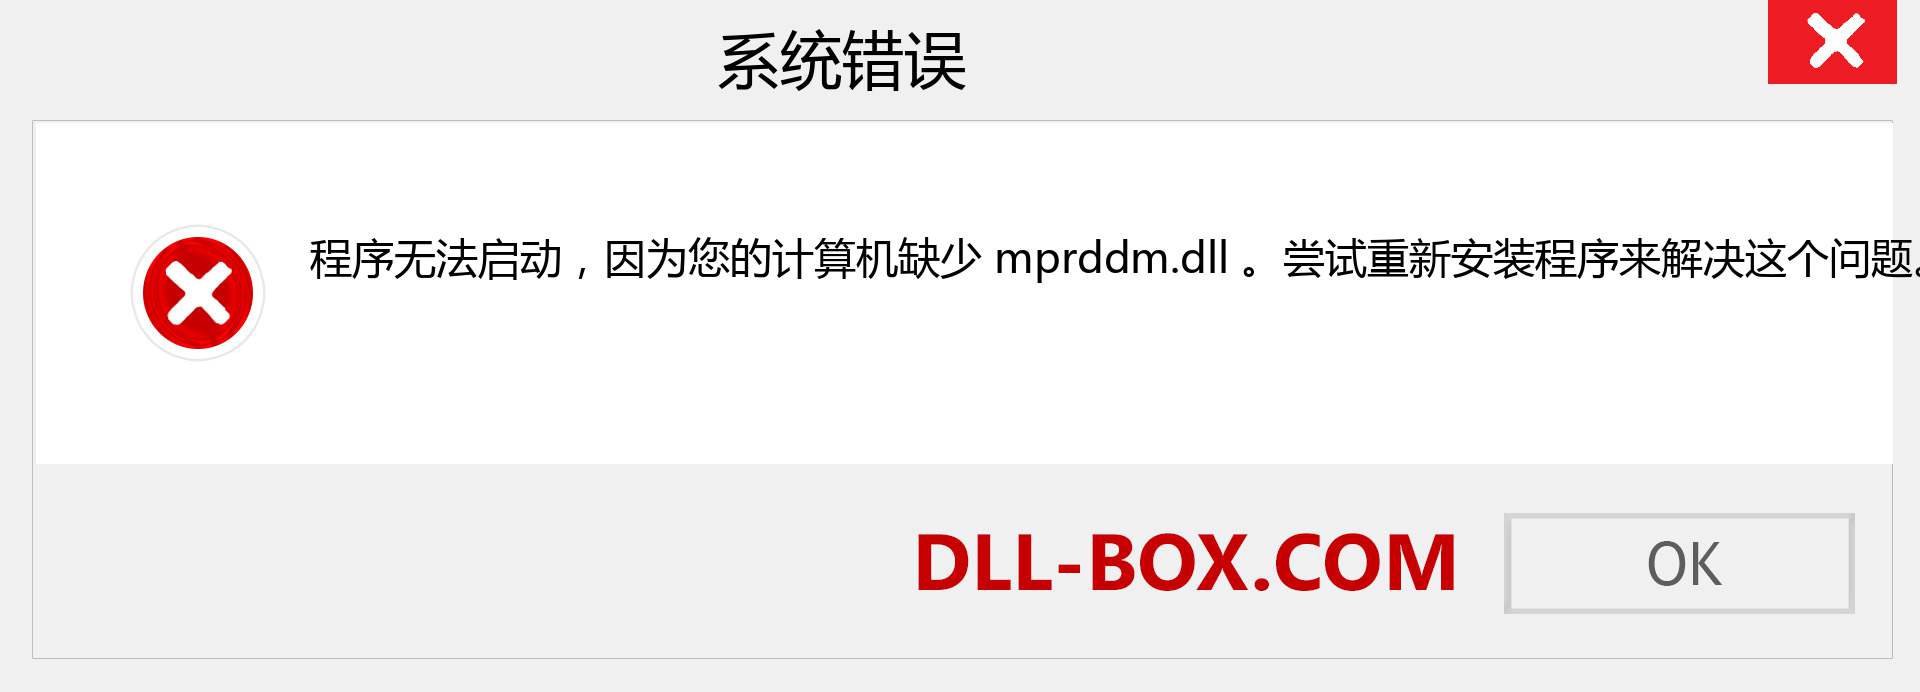 mprddm.dll 文件丢失？。 适用于 Windows 7、8、10 的下载 - 修复 Windows、照片、图像上的 mprddm dll 丢失错误